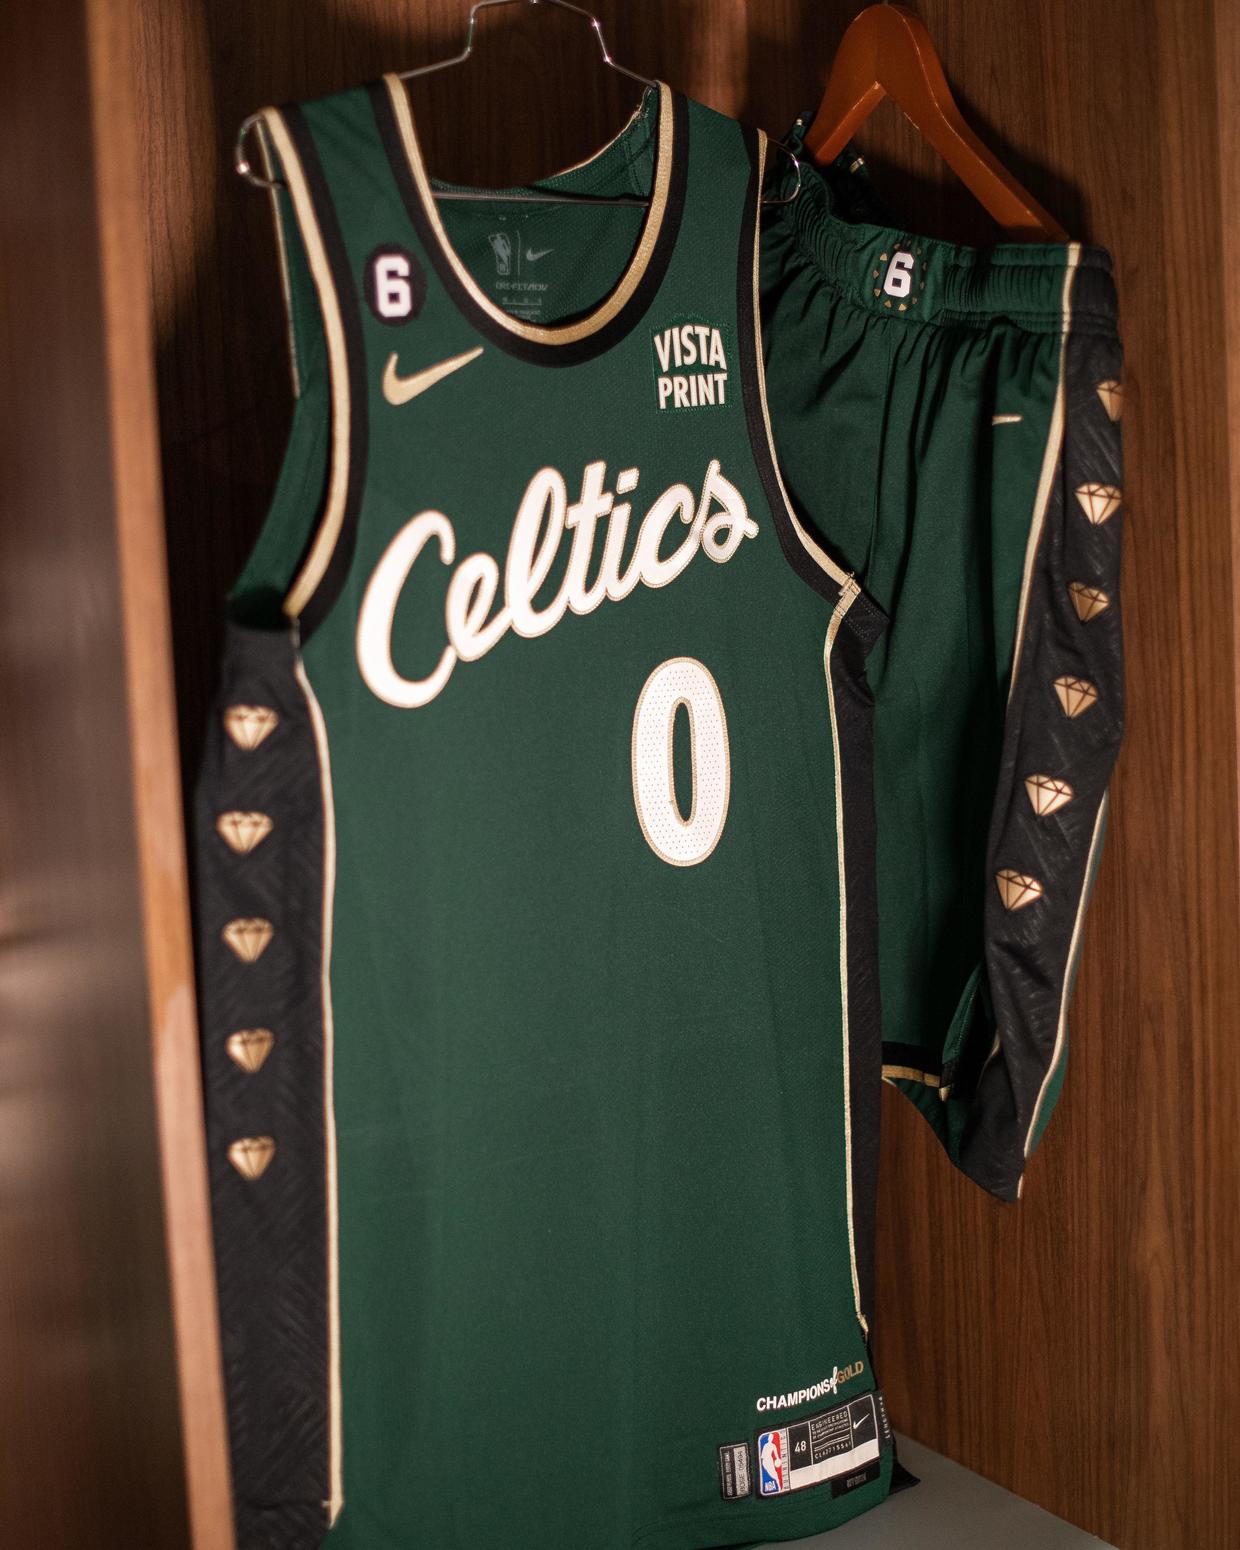 Celtics unveil "City Edition" uniforms honoring Bill Russell CBS Boston